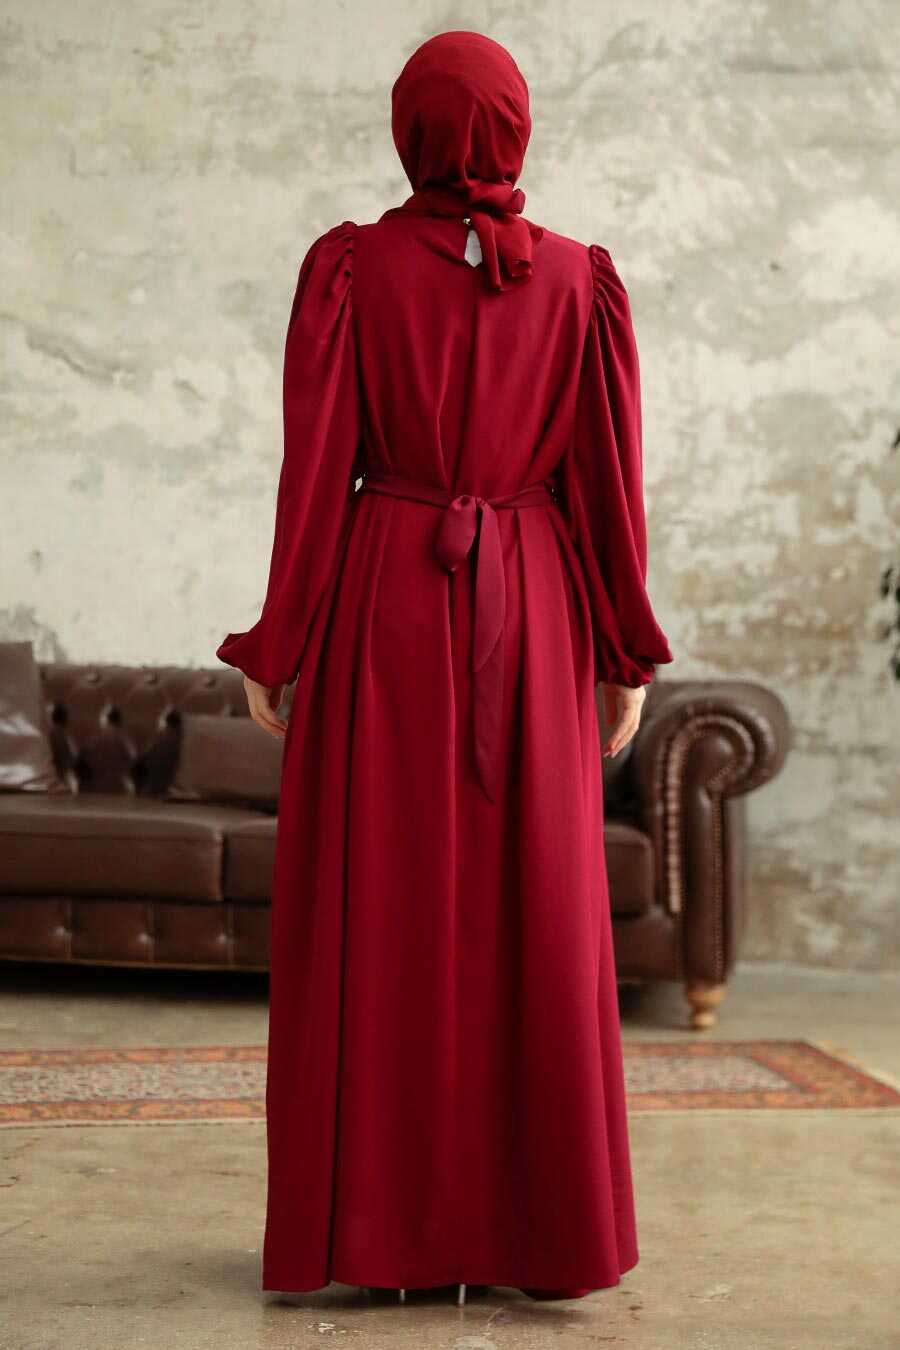 Neva Style - Claret Red Hijab Turkish Dress 5866BR